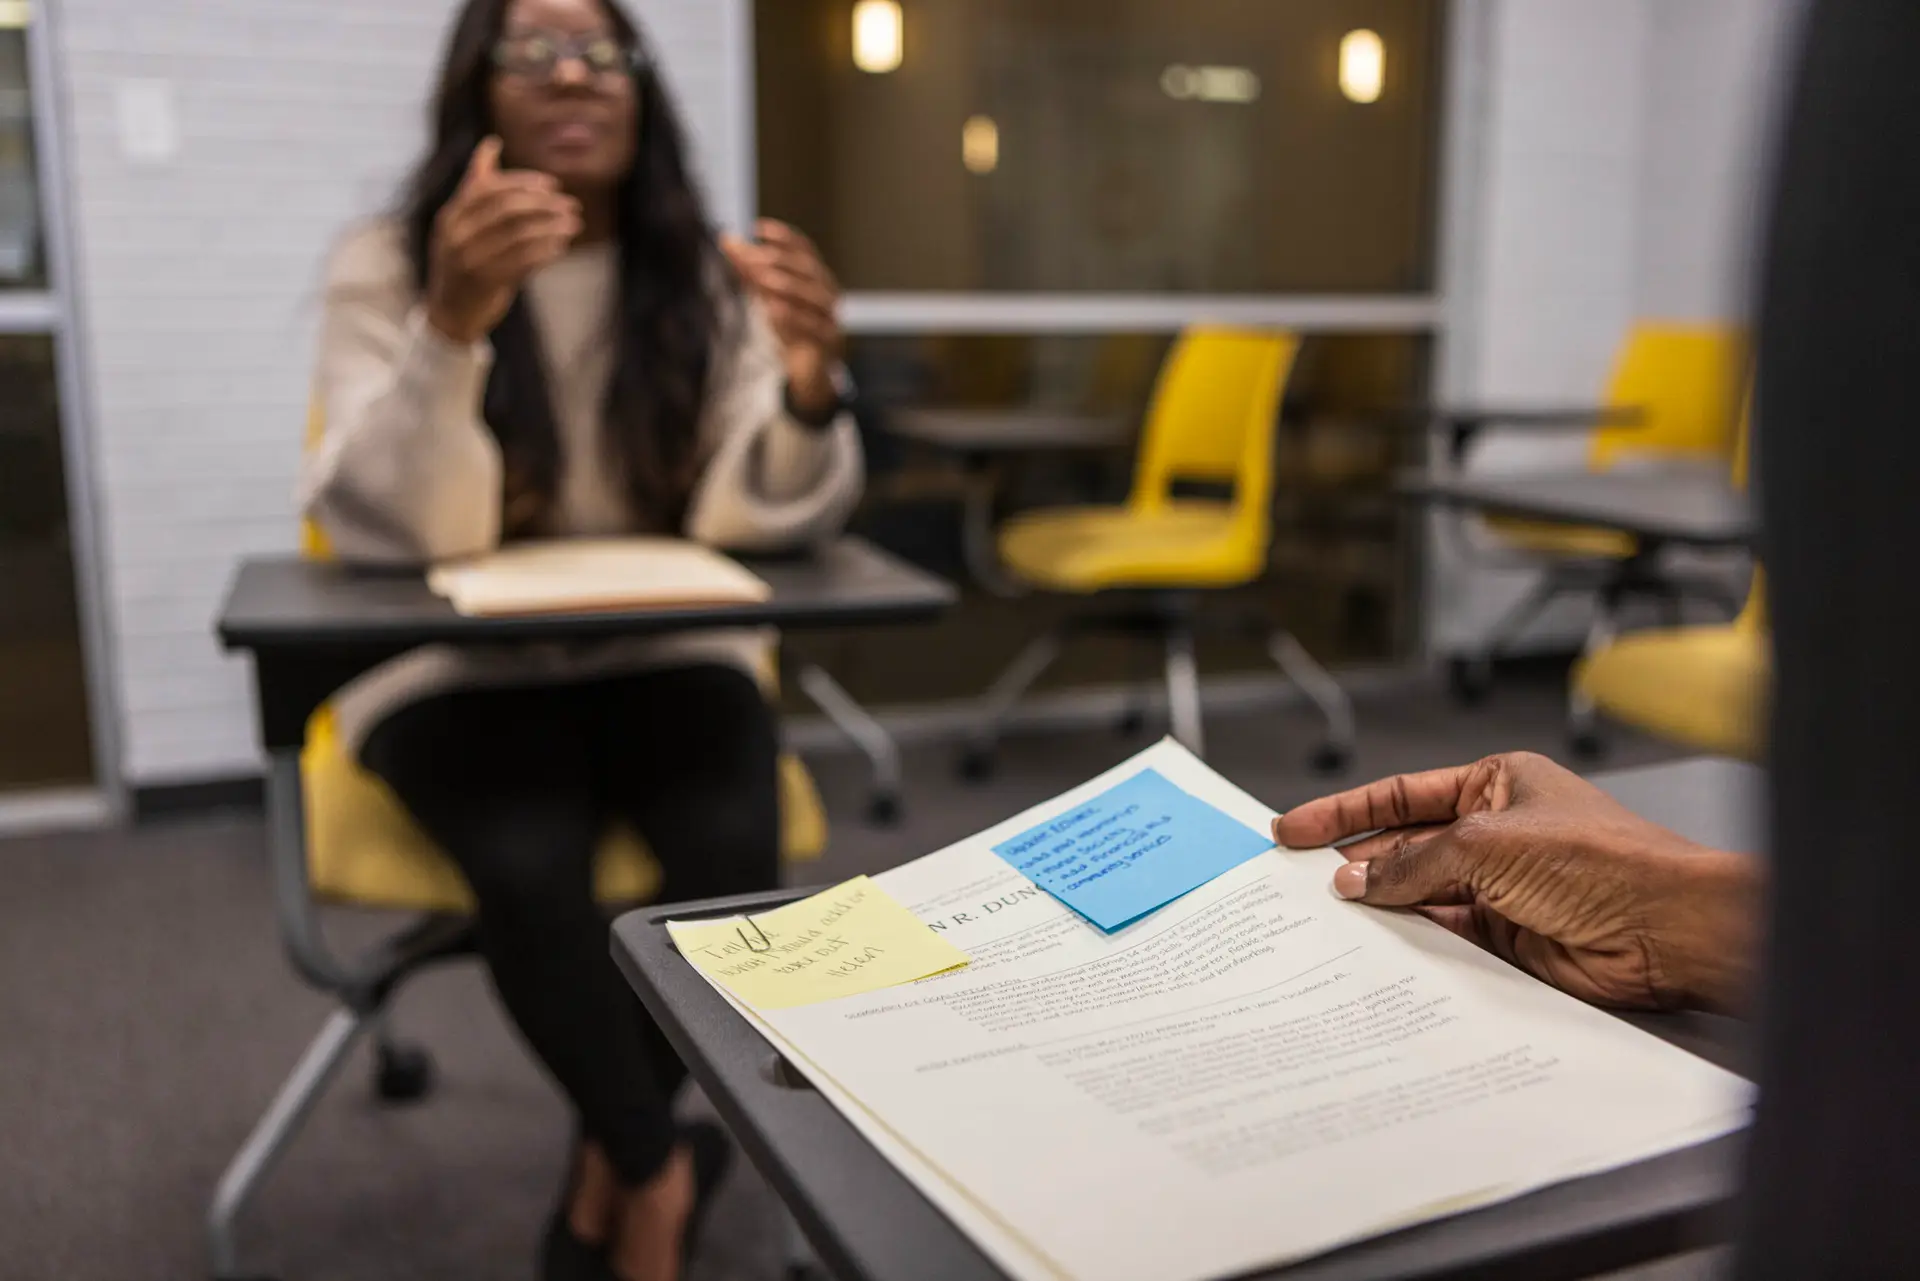 A black female college student participates in a mock job interview